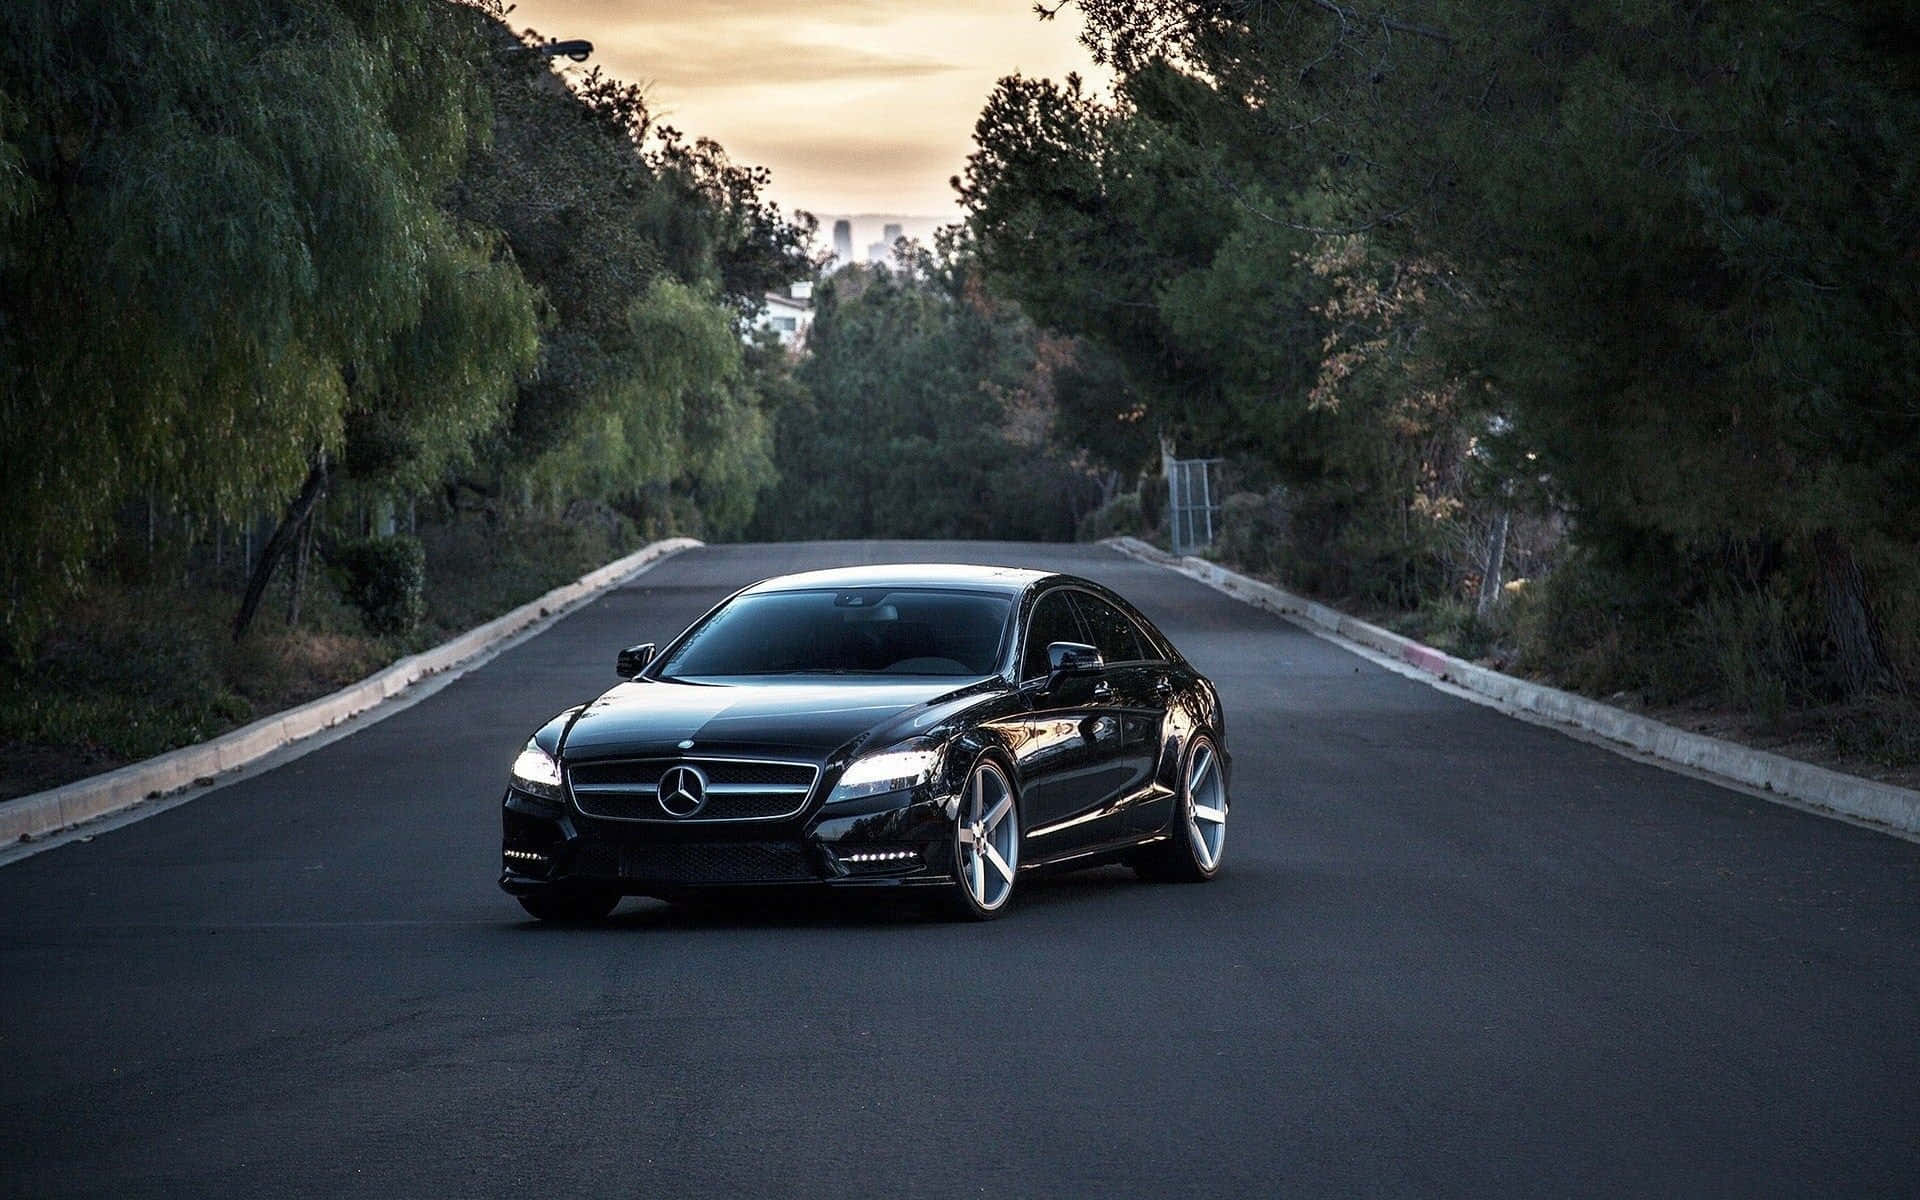 Driving elegance in black – the Mercedes Black Wallpaper